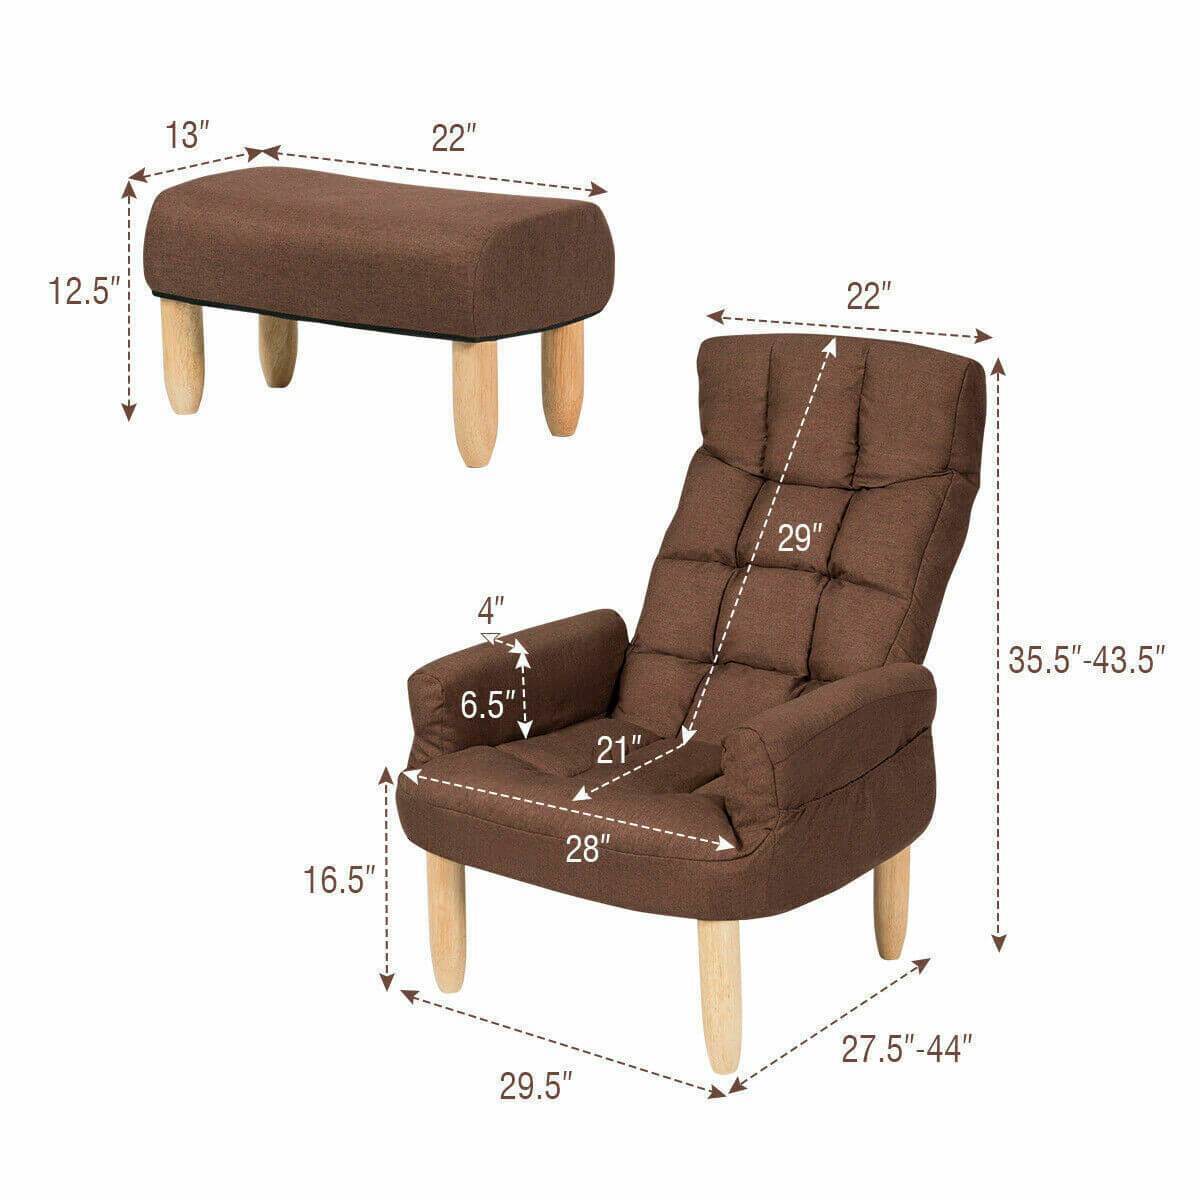 Aula - Armchair Adjustable Backrest & Headrest - Nordic Side - architecture, Armchair Adjustable Backrest & Headrest, art, artist, ashley furniture near me, bobs furniture outlet, chairs, che